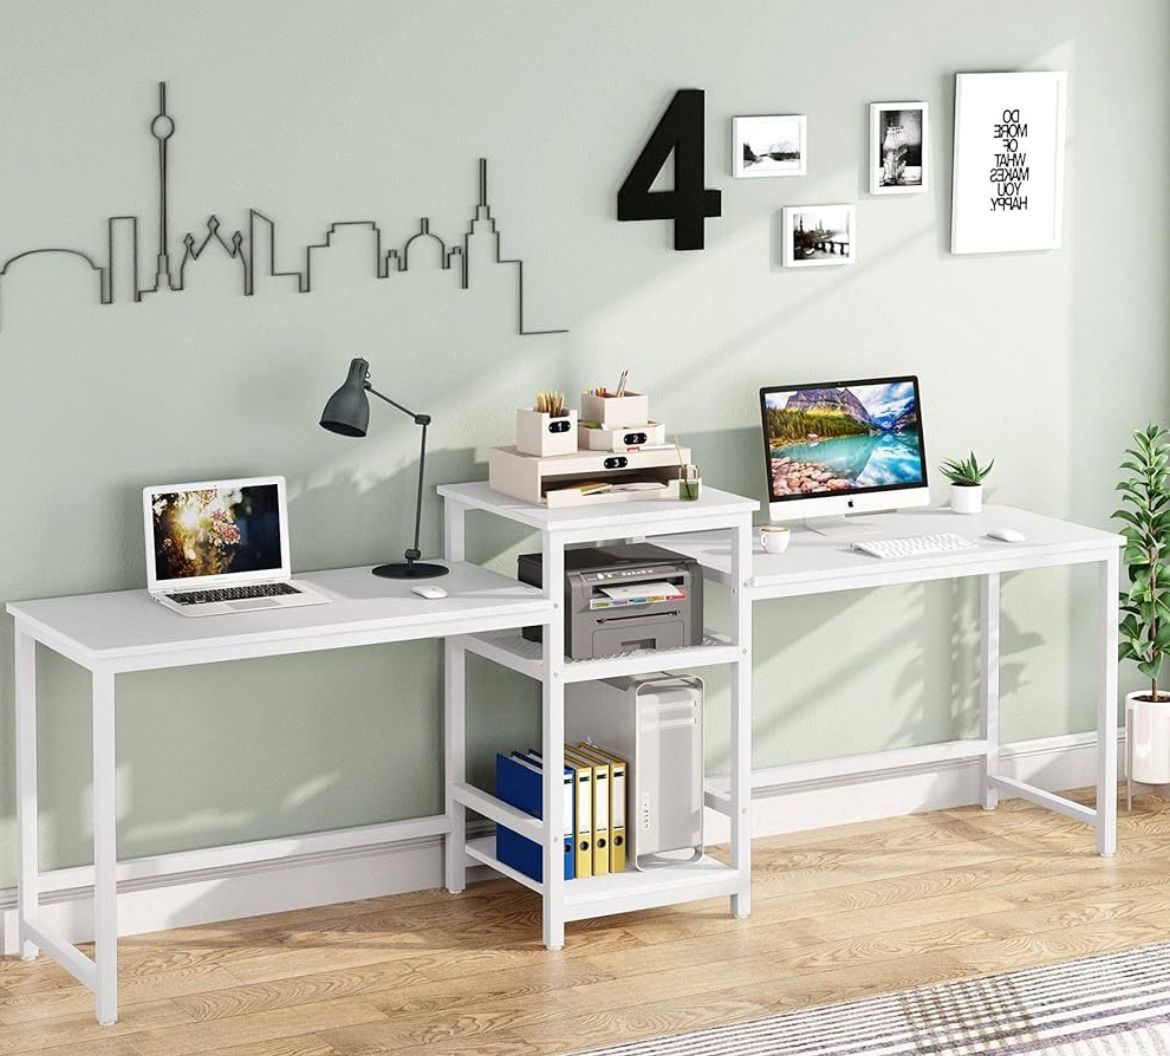 Double Computer Desk with Printer Shelf